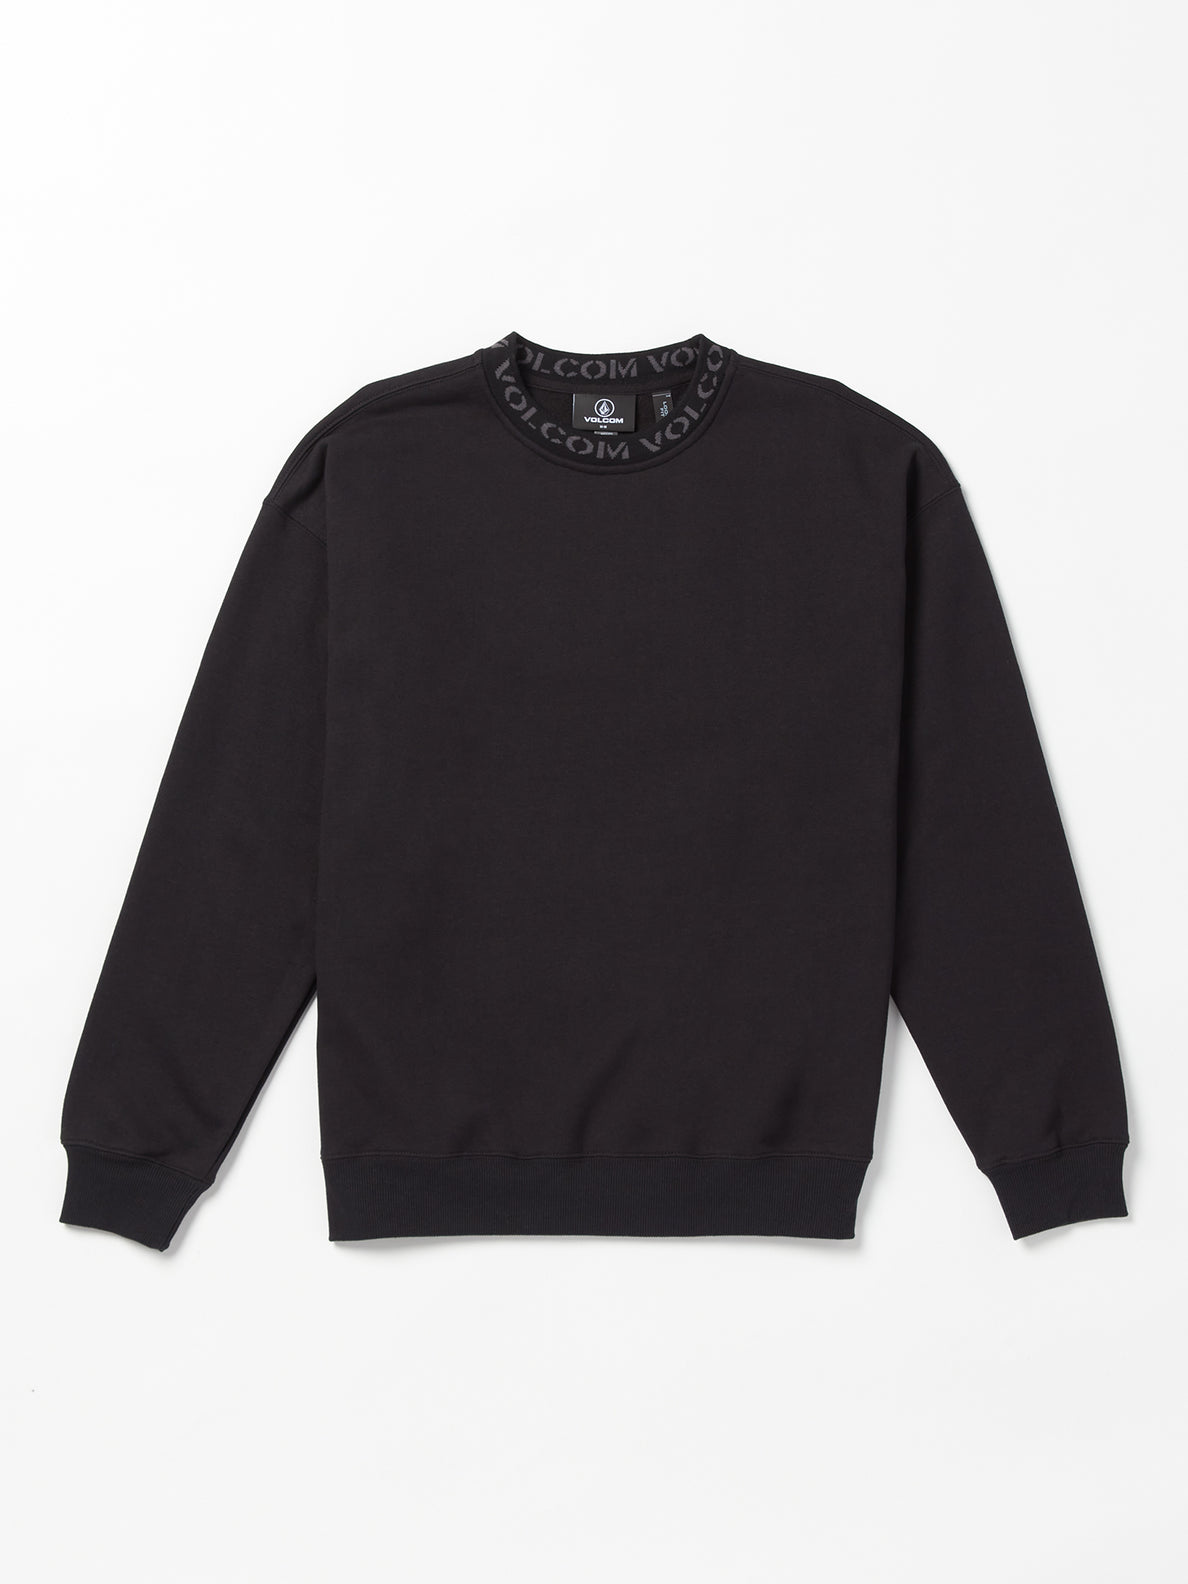 Volcom | Skate Vital Crew Pullover Sweatshirt (Black)